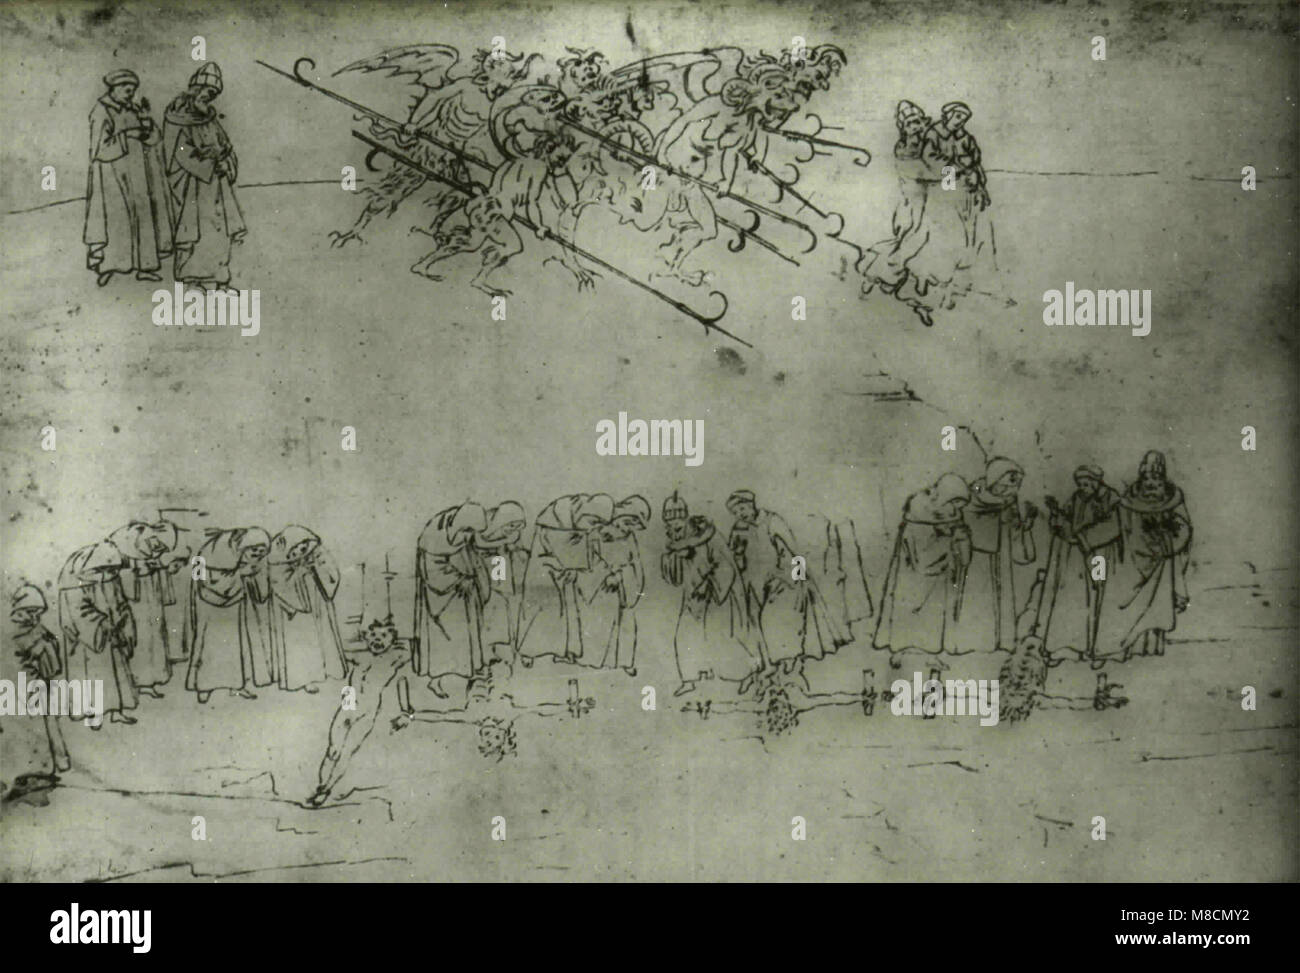 Canto XXIII (23), Dante's Inferno illustration by Botticelli Stock Photo